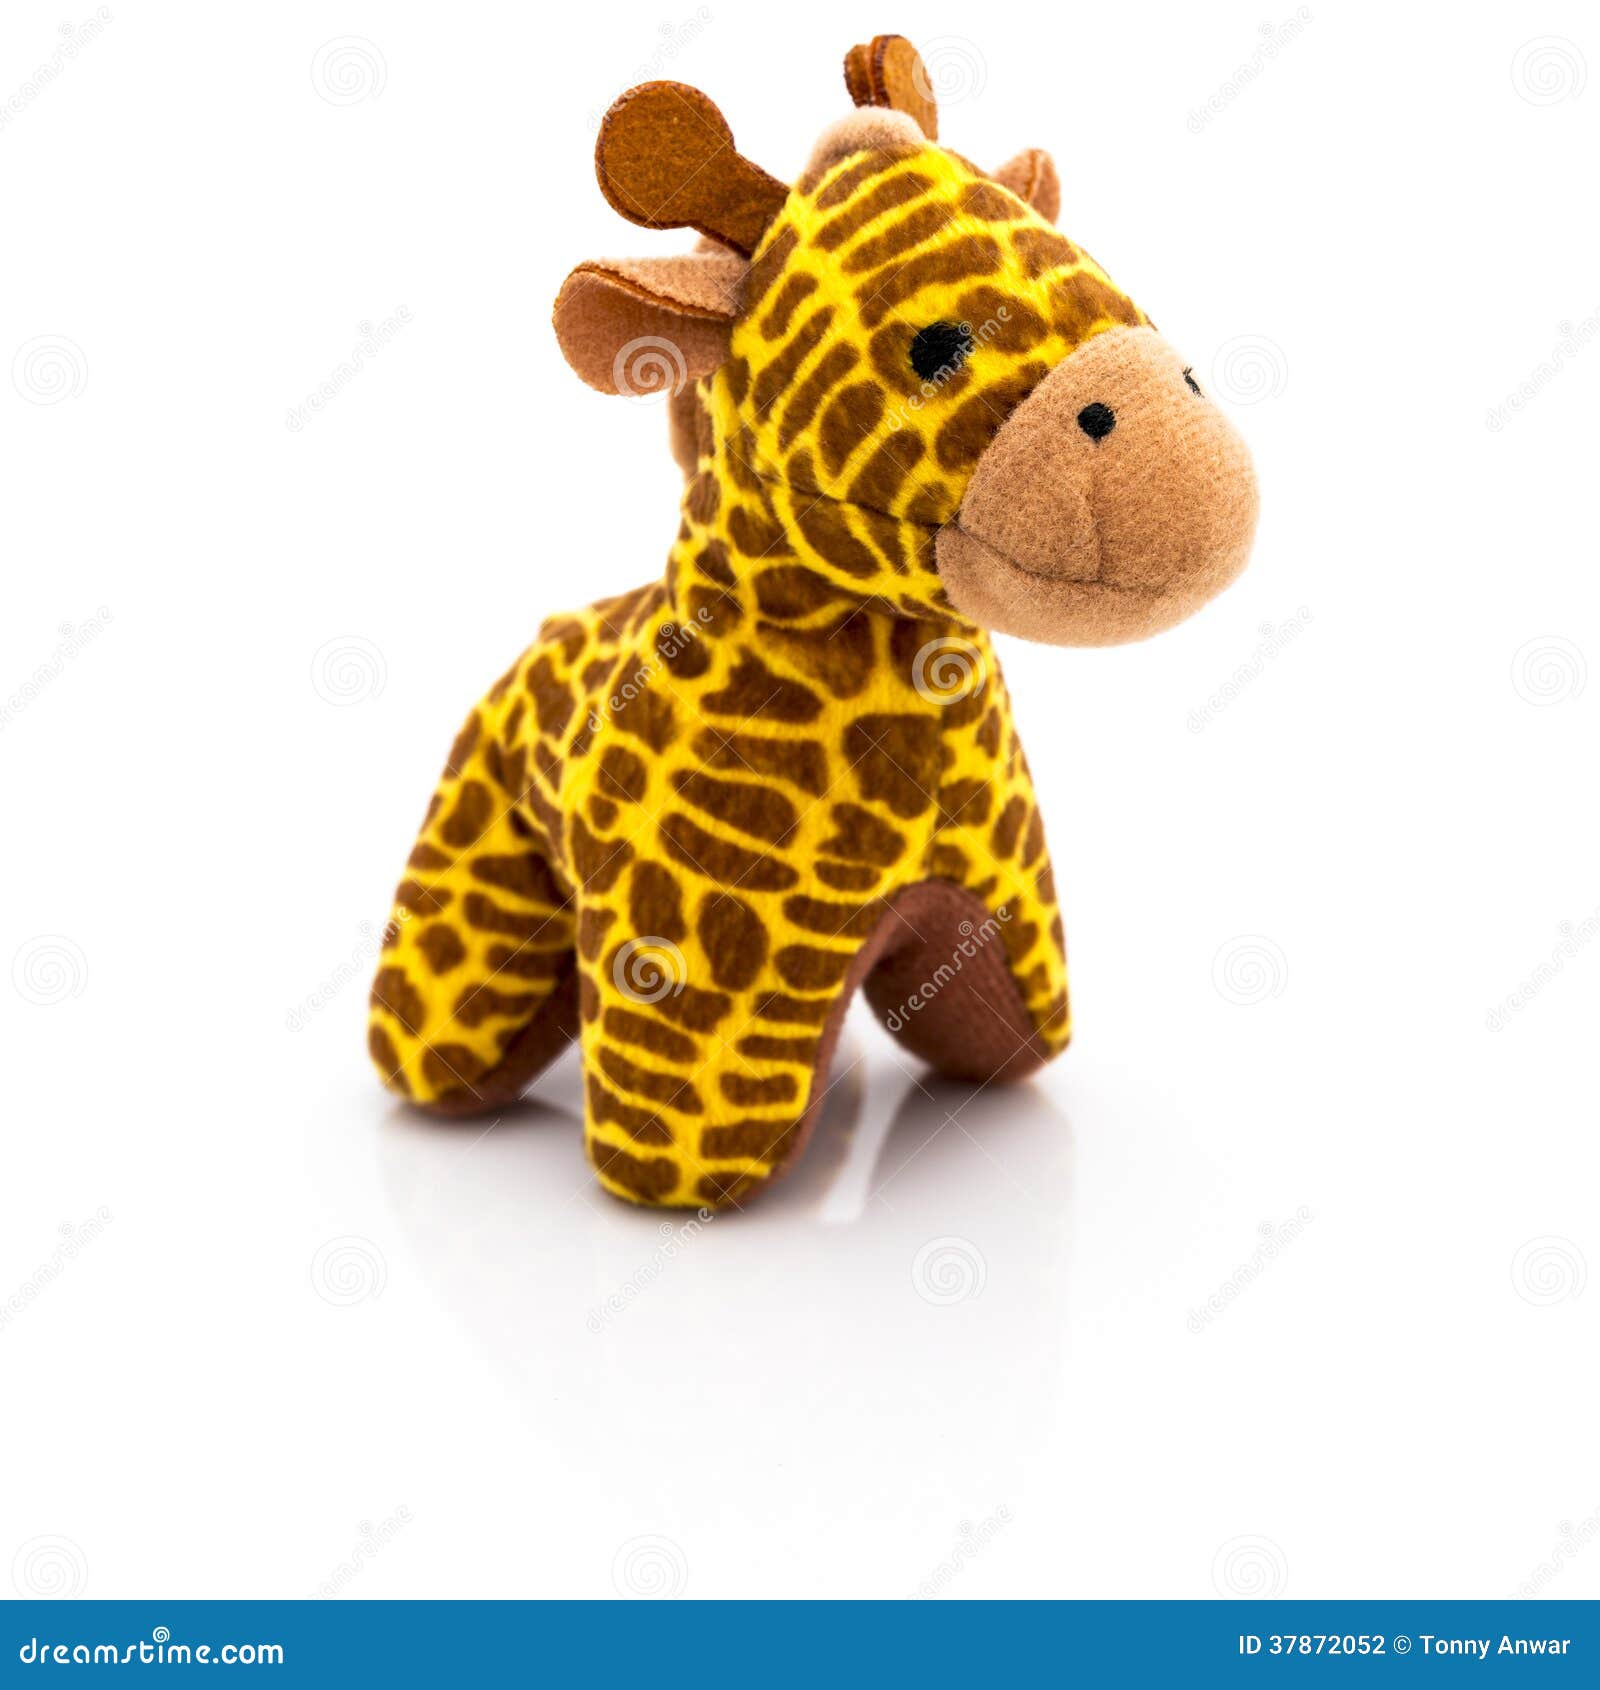 plush toy giraffe